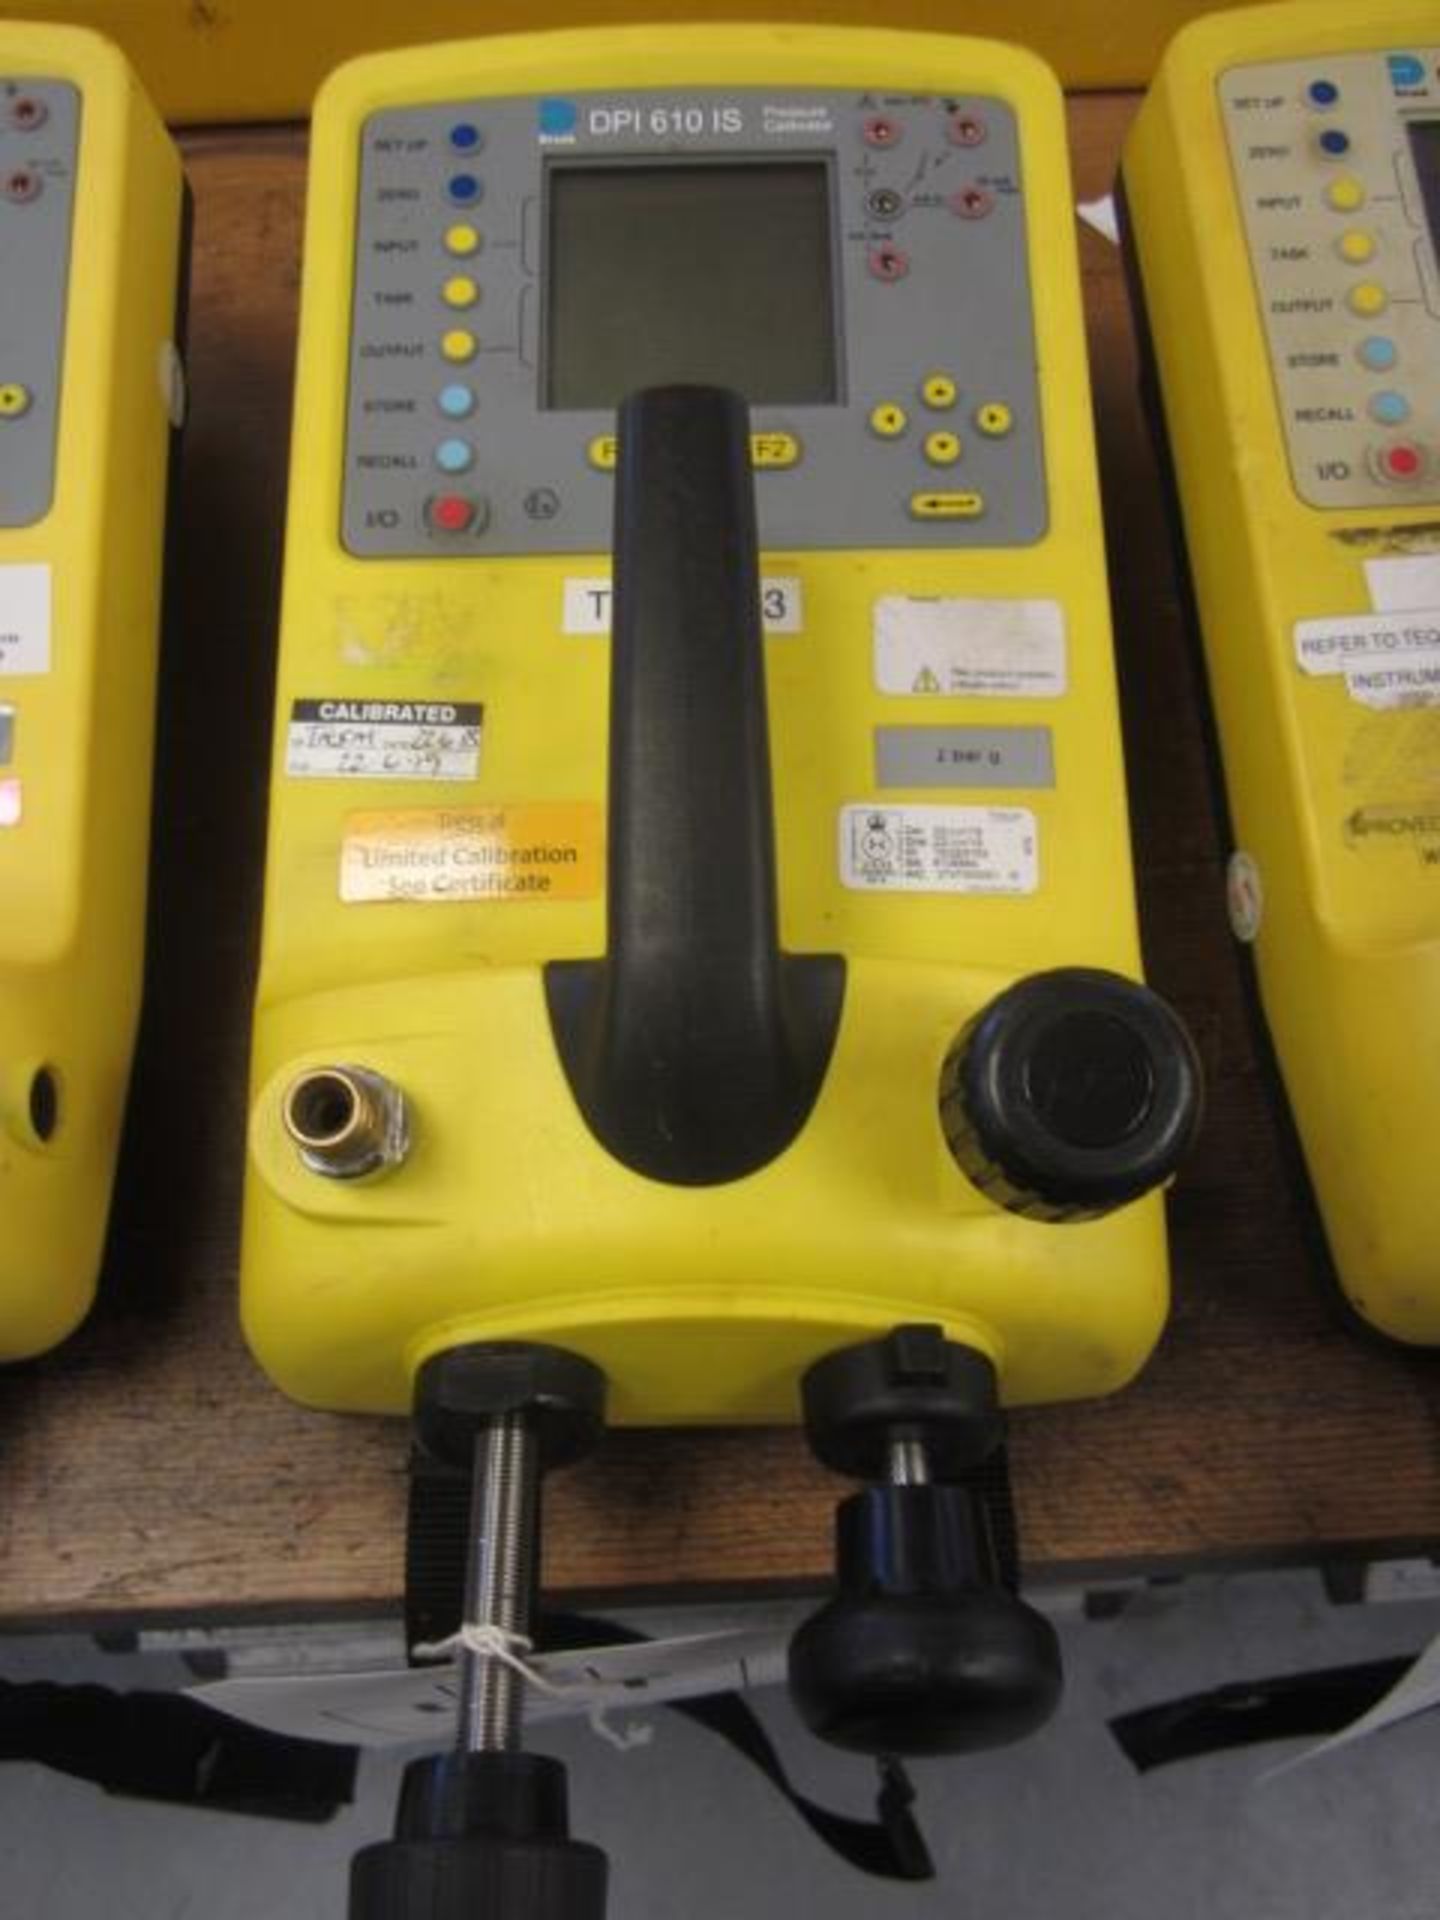 Druck DPI 610 IS pressure calibrator, serial no. 6106884